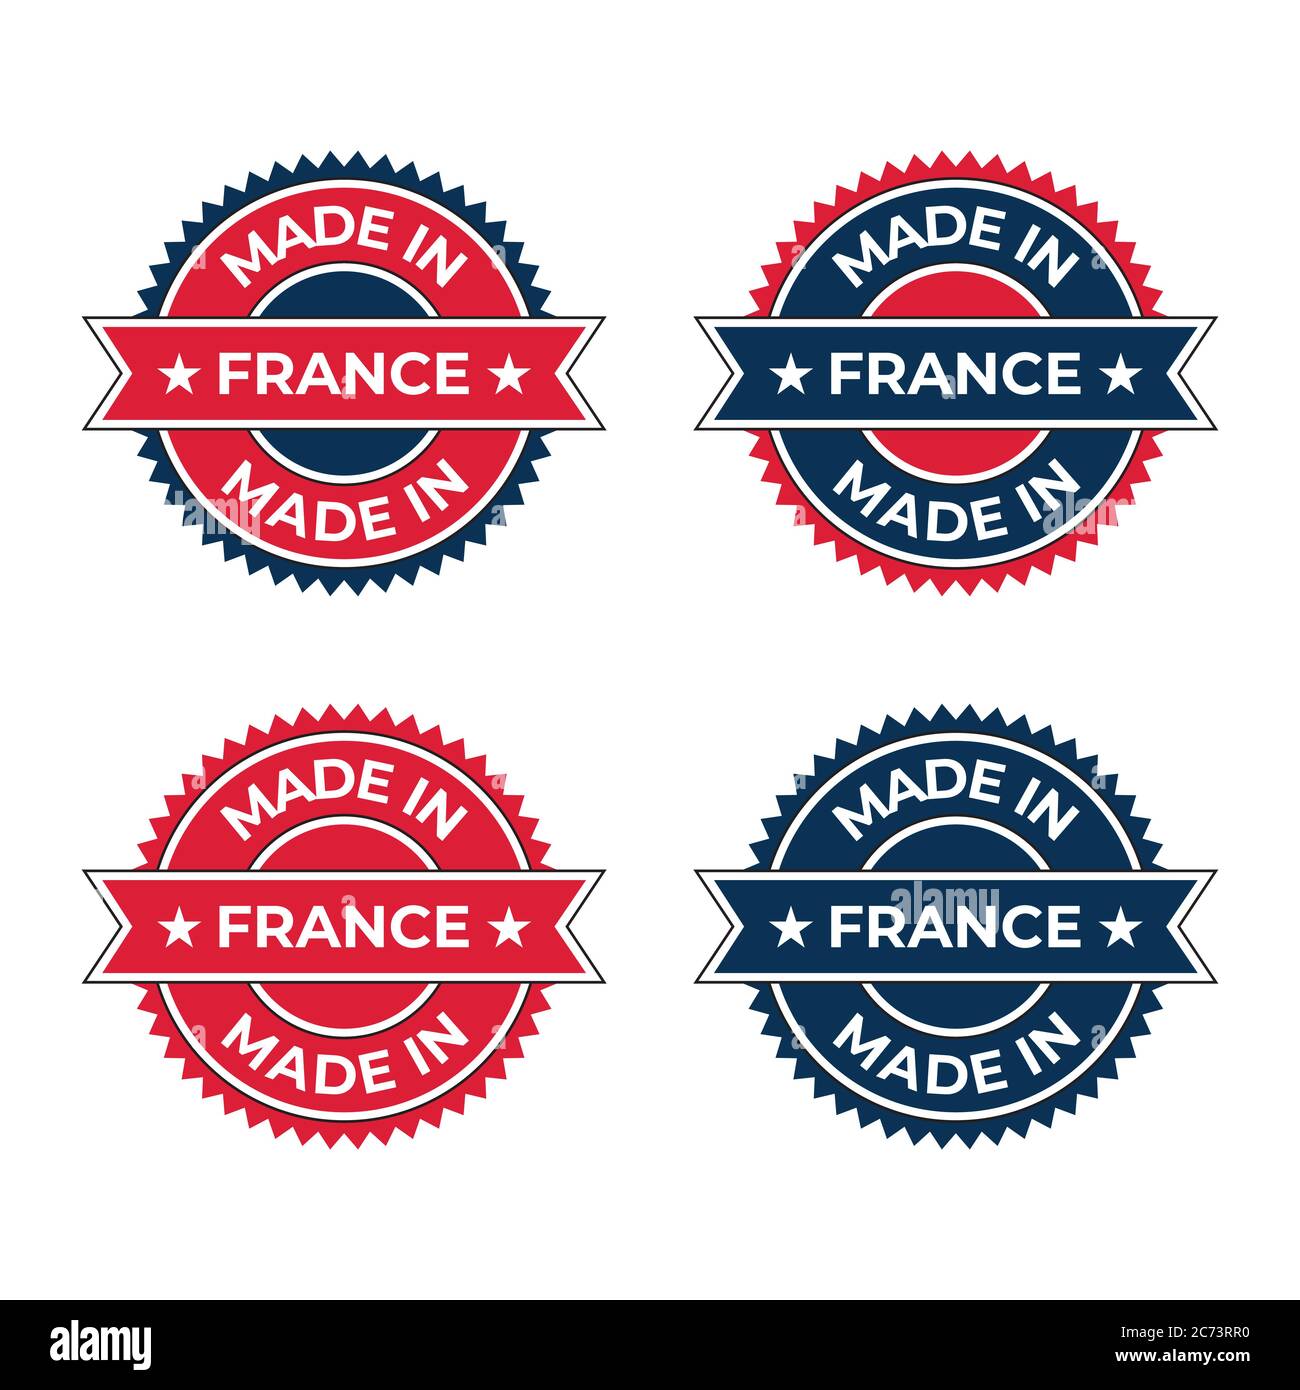 Made In France Labels Set French Product Emblem Stock Illustration